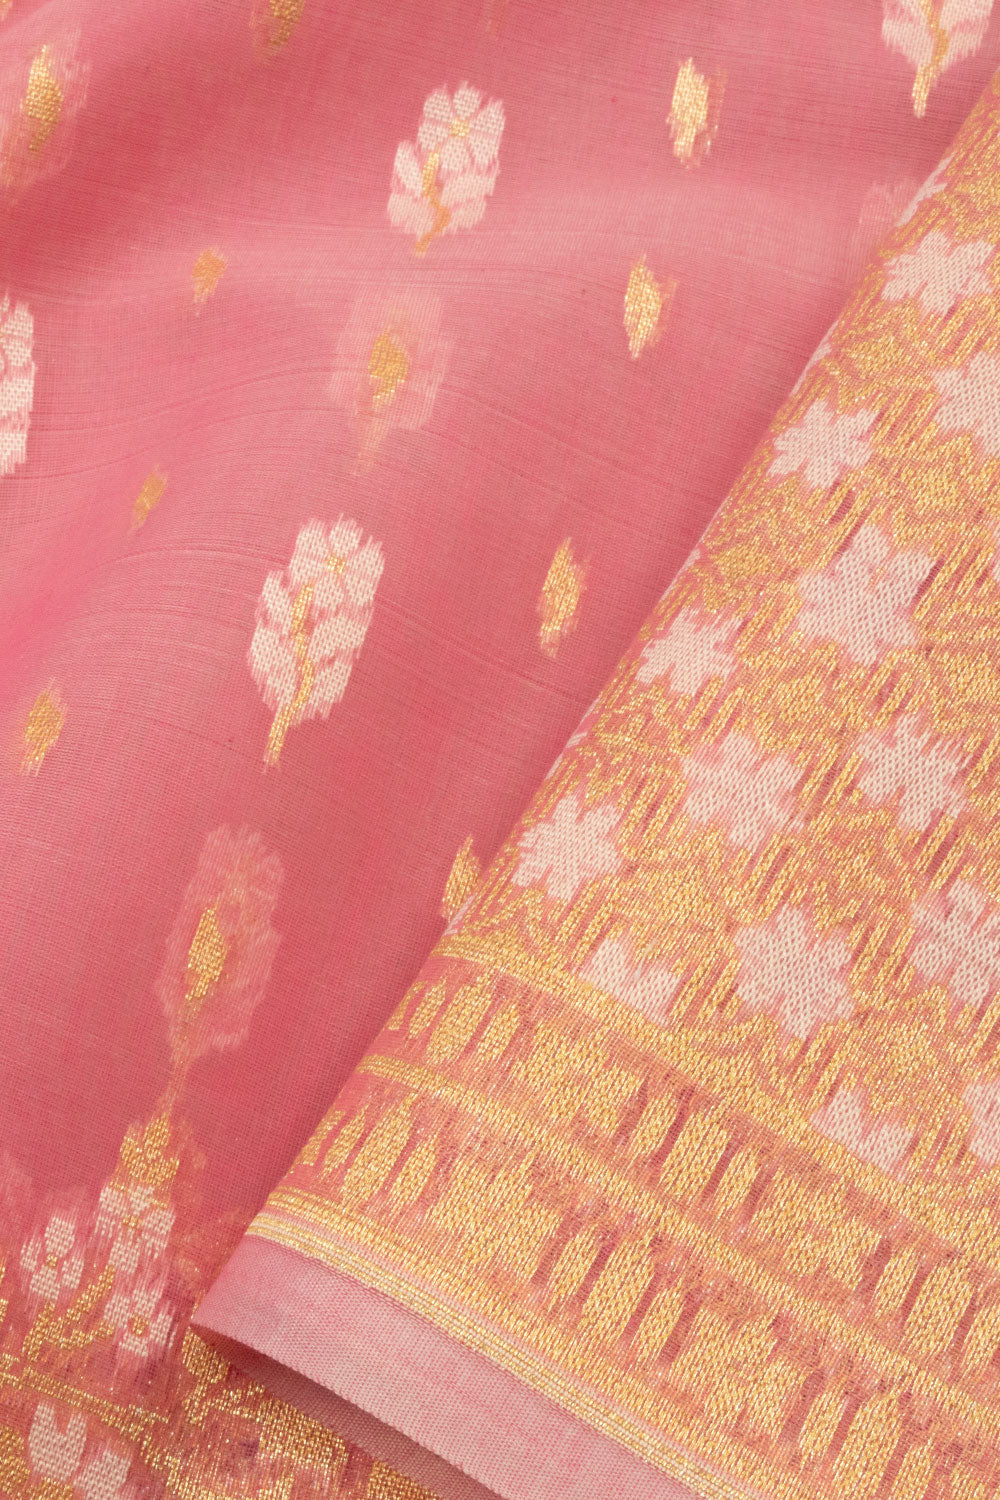 Pink Handloom Banarasi Cotton Saree - Avishya 